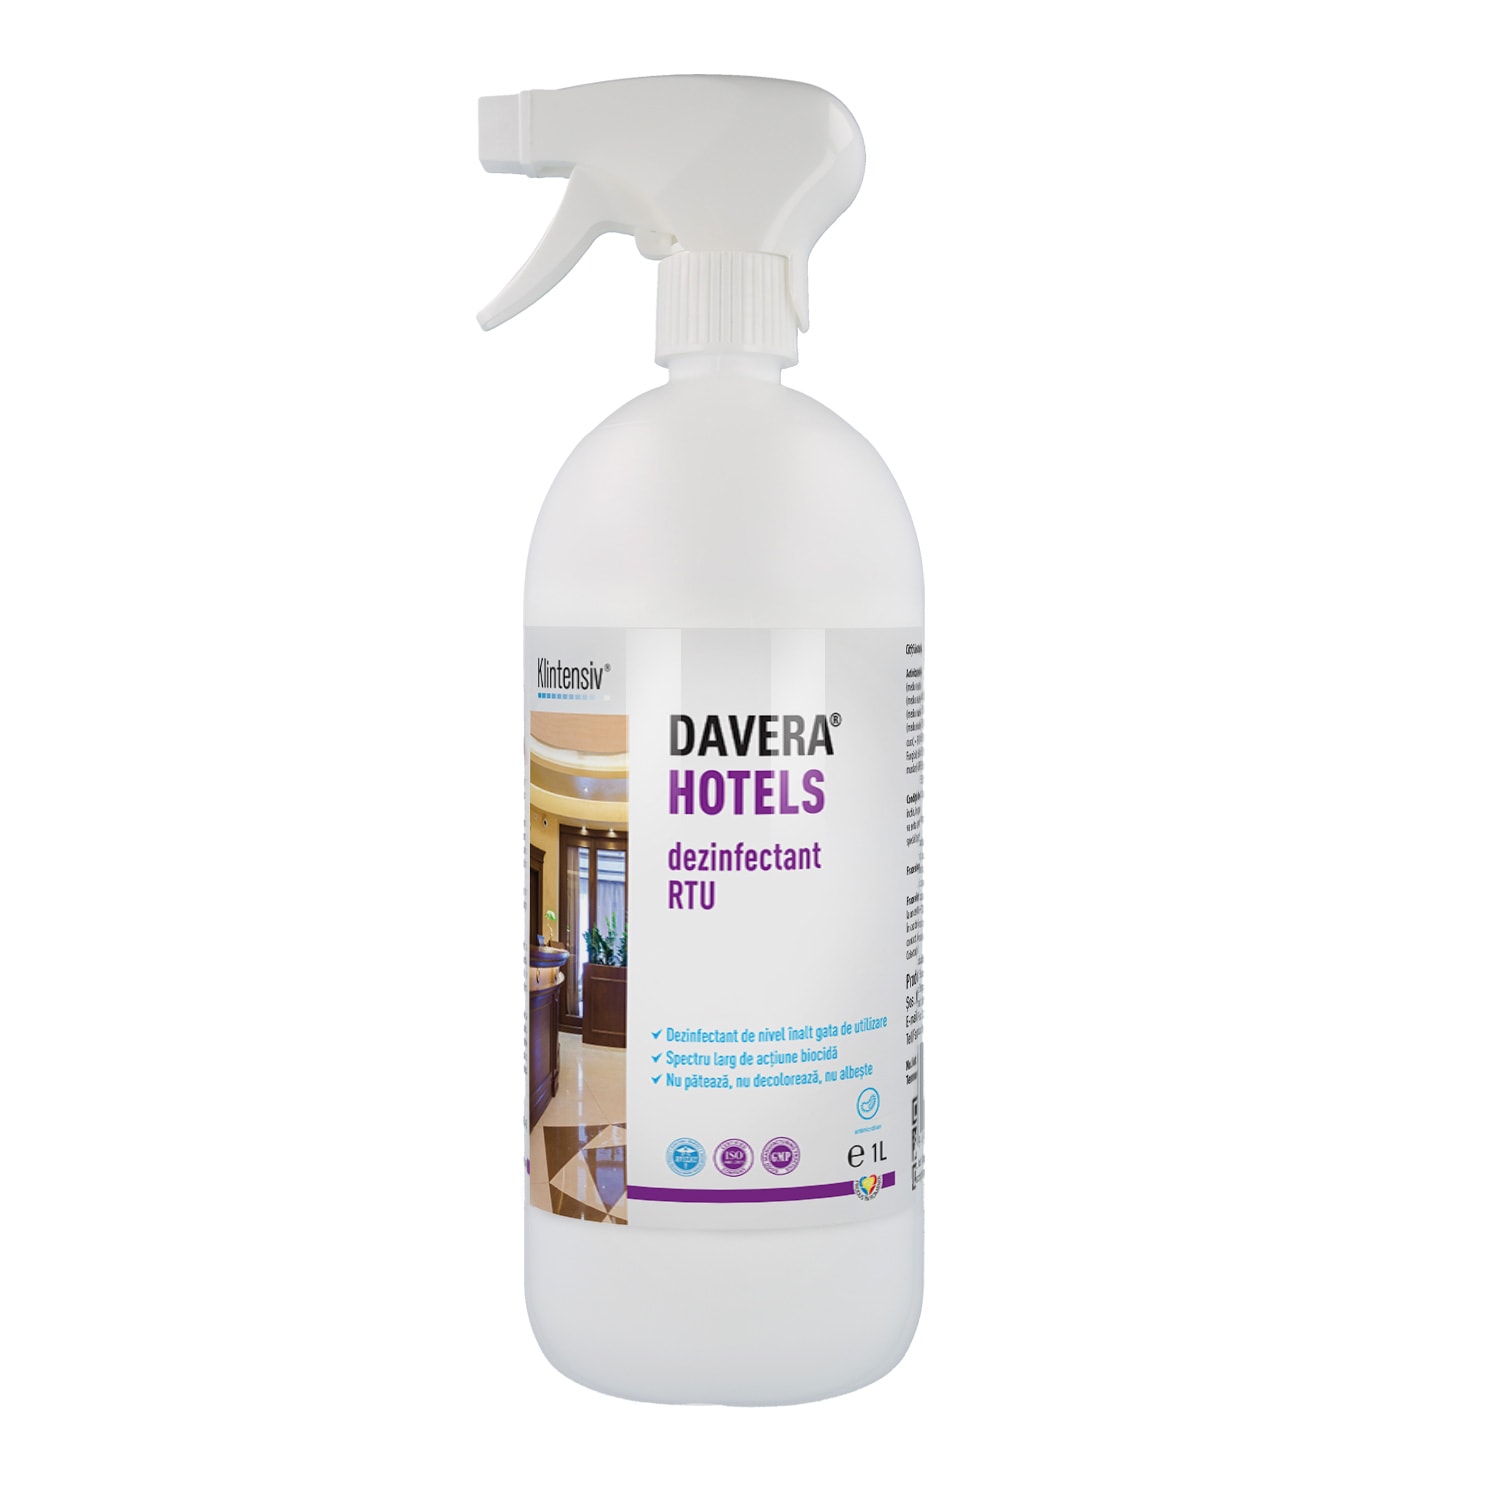 Davera® hotels - dezinfectant rtu, 1 litru